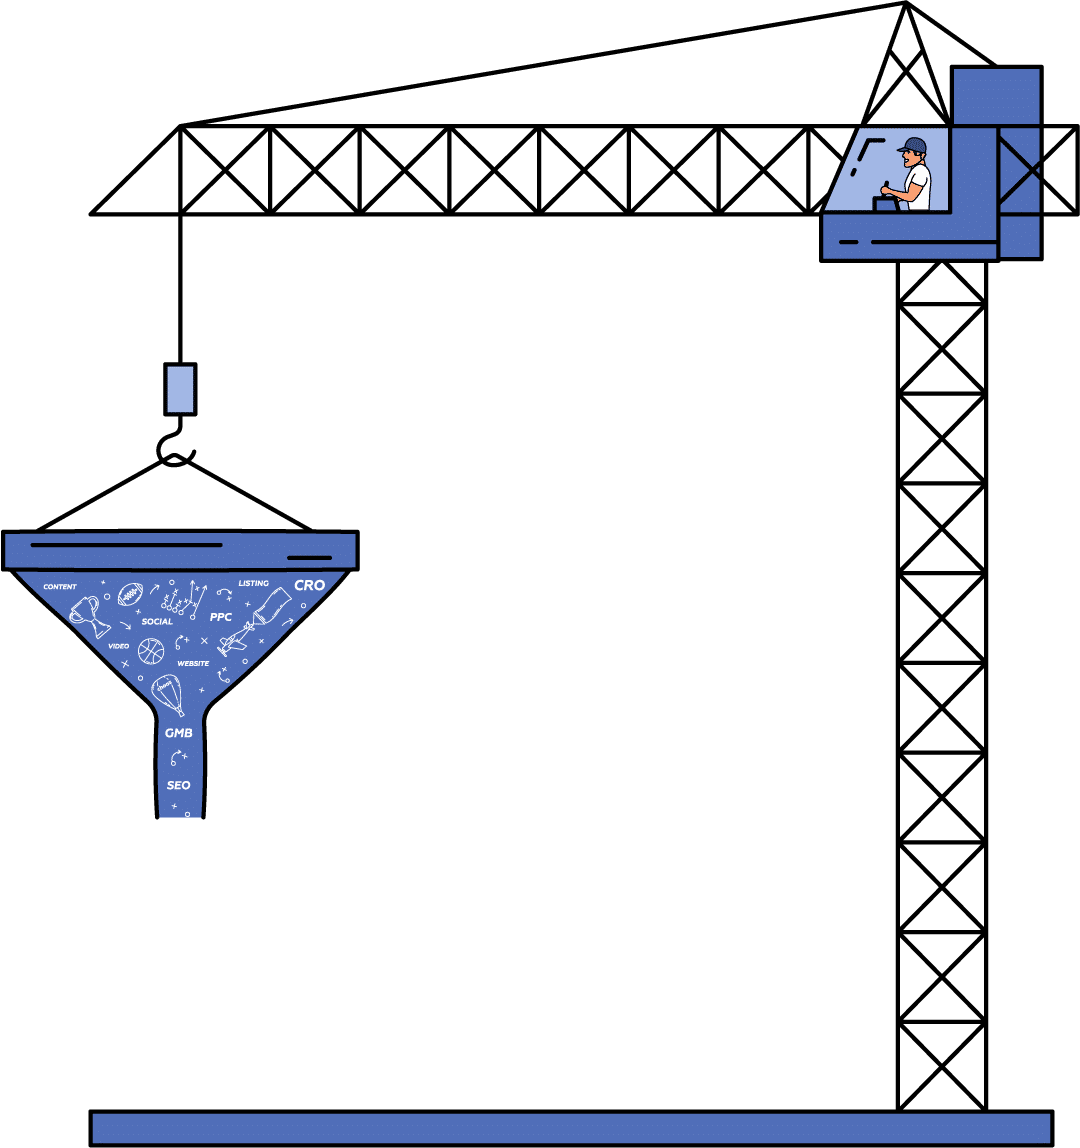 Chooz Marketing construction crane with digital marketing funnel illustration